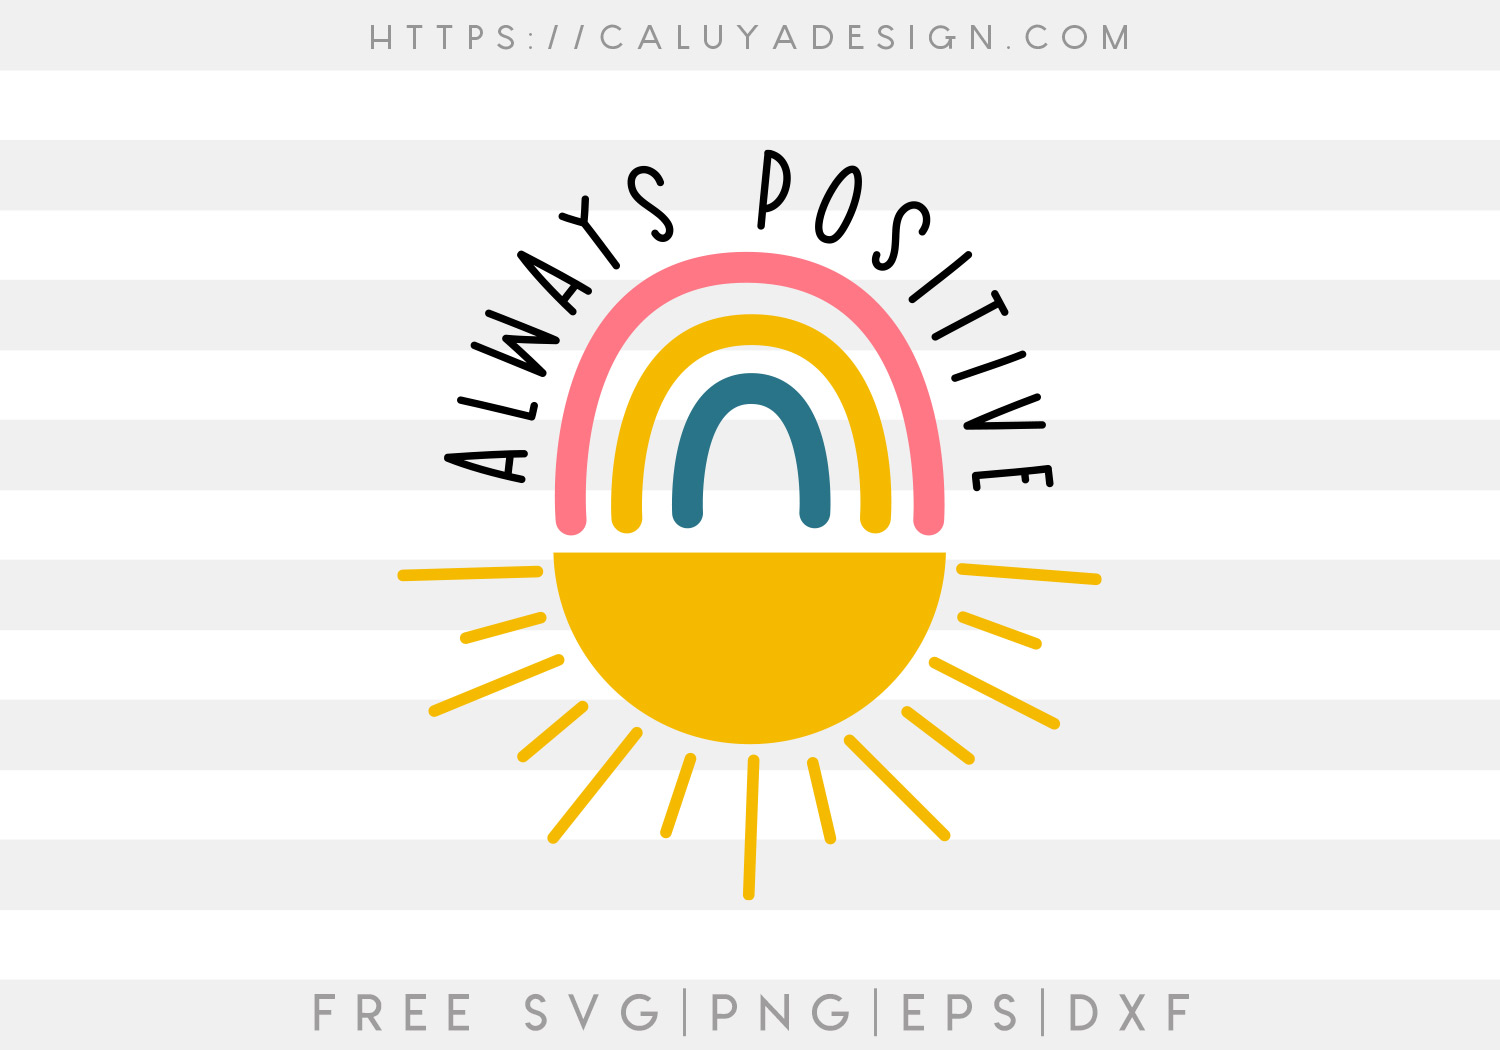 Free Always Positive SVG